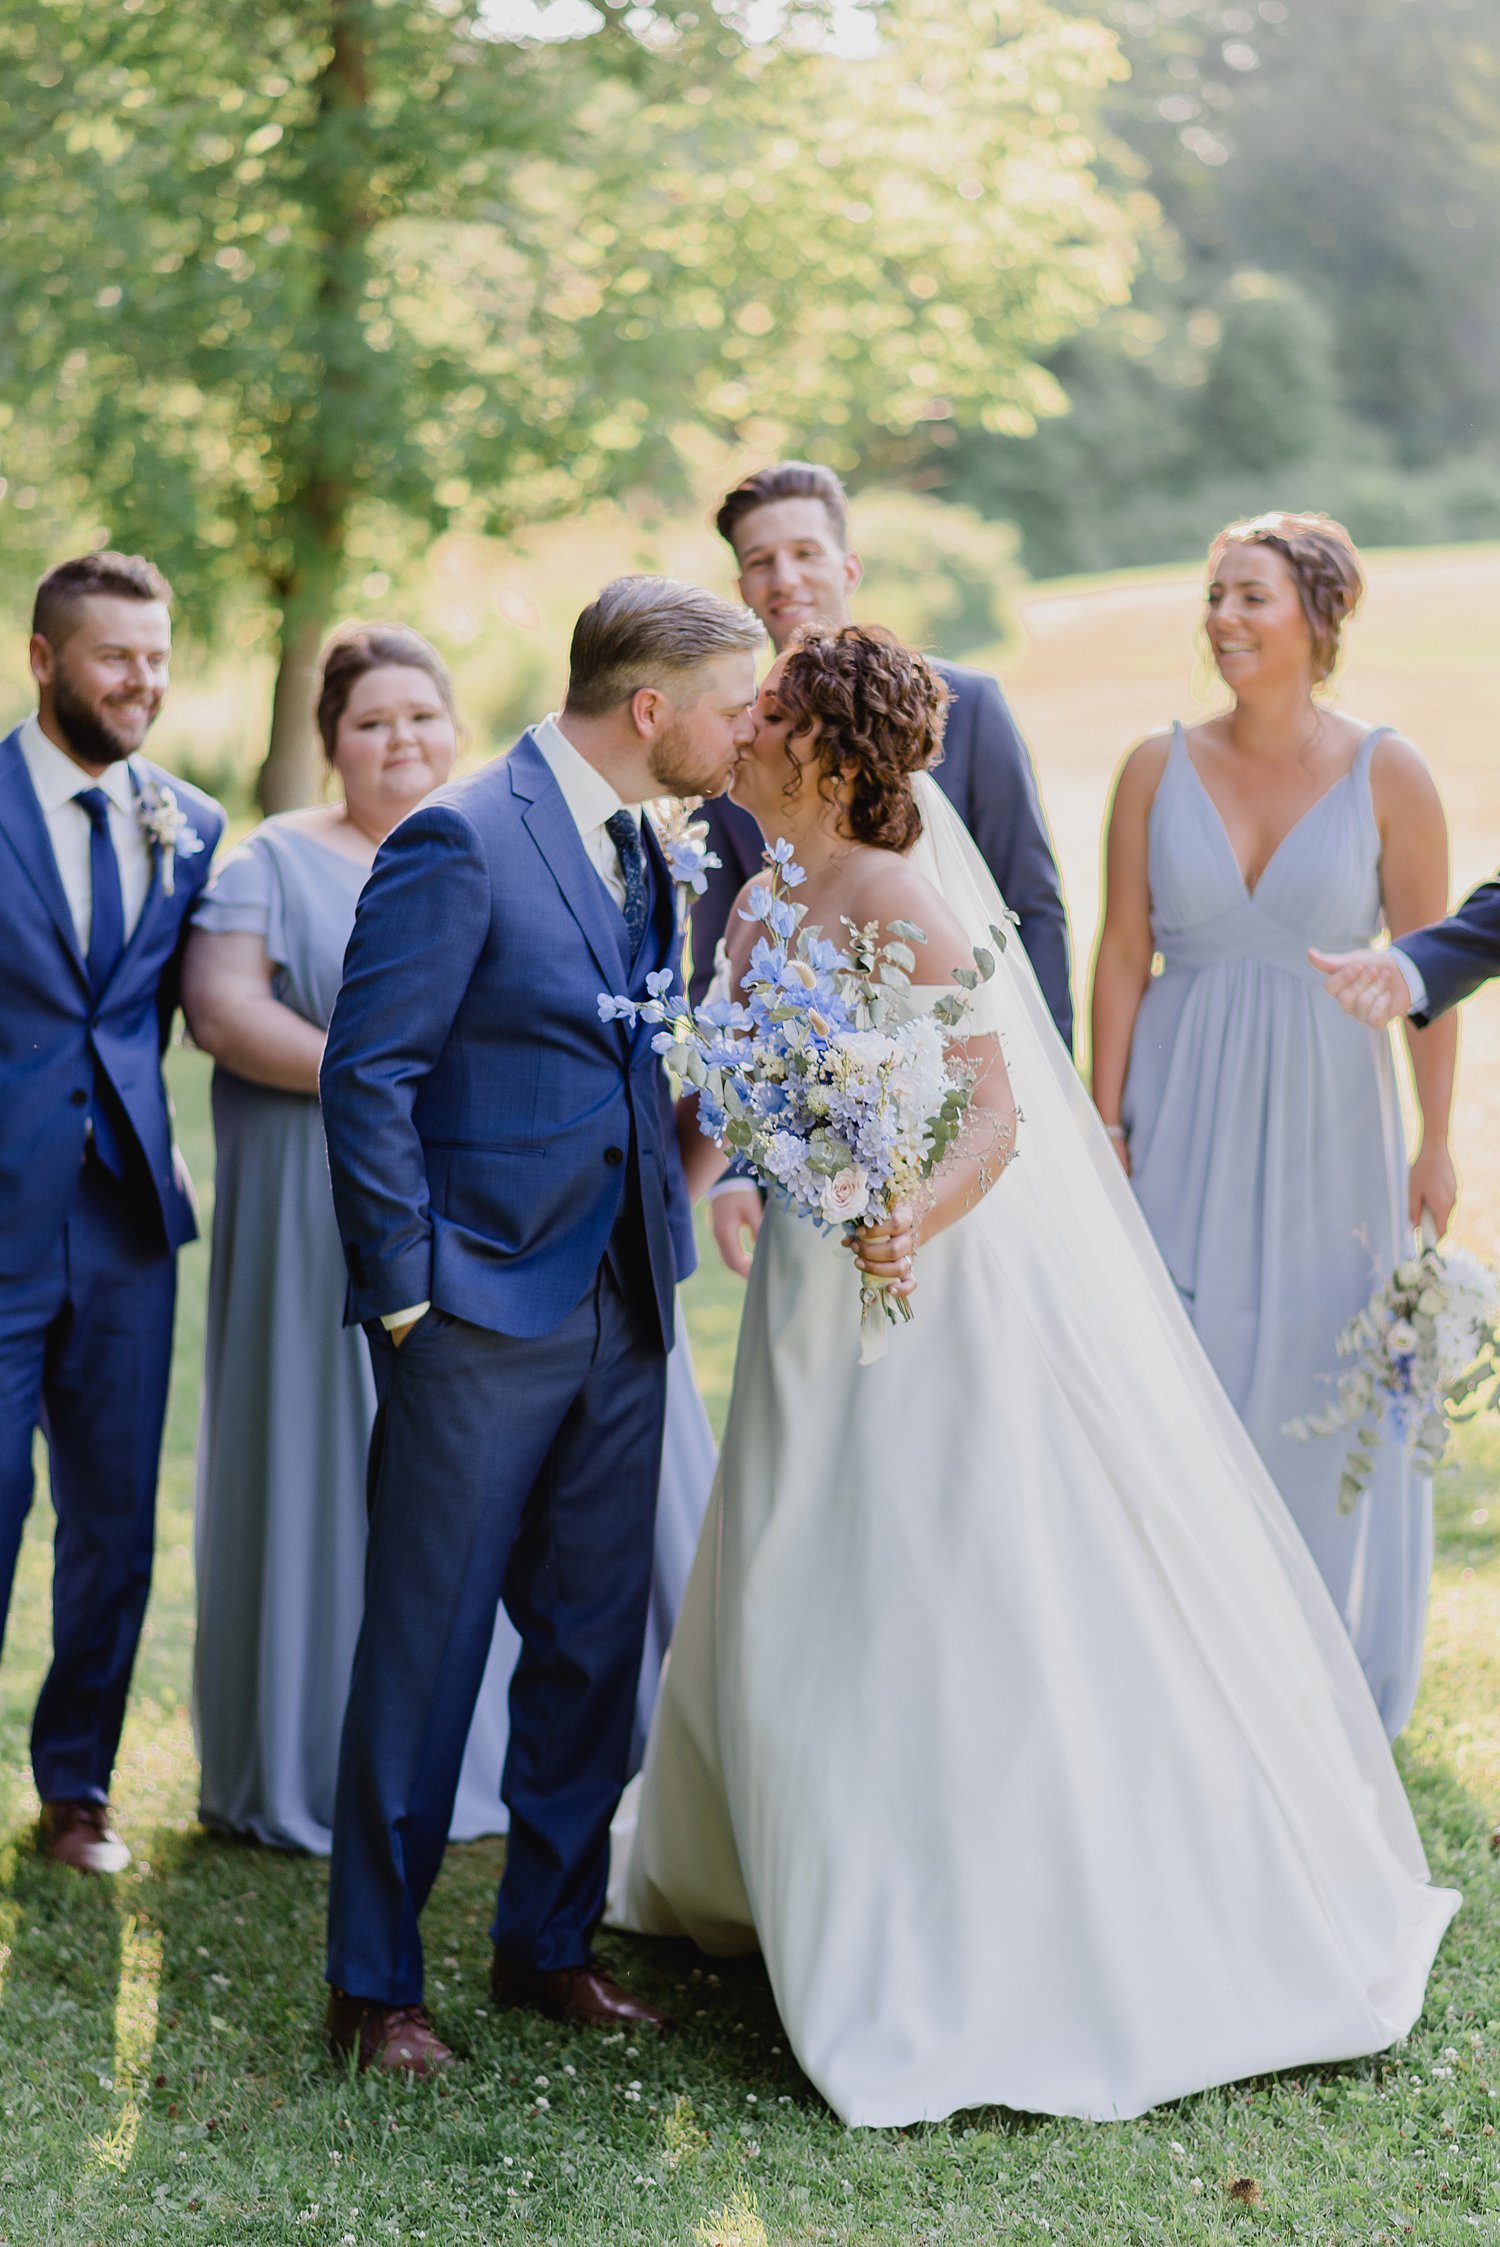 Elegant Summer Backyard Tented Wedding in Sydenham, Ontario | Prince Edward County Wedding Photographer | Holly McMurter Photographs_0069.jpg